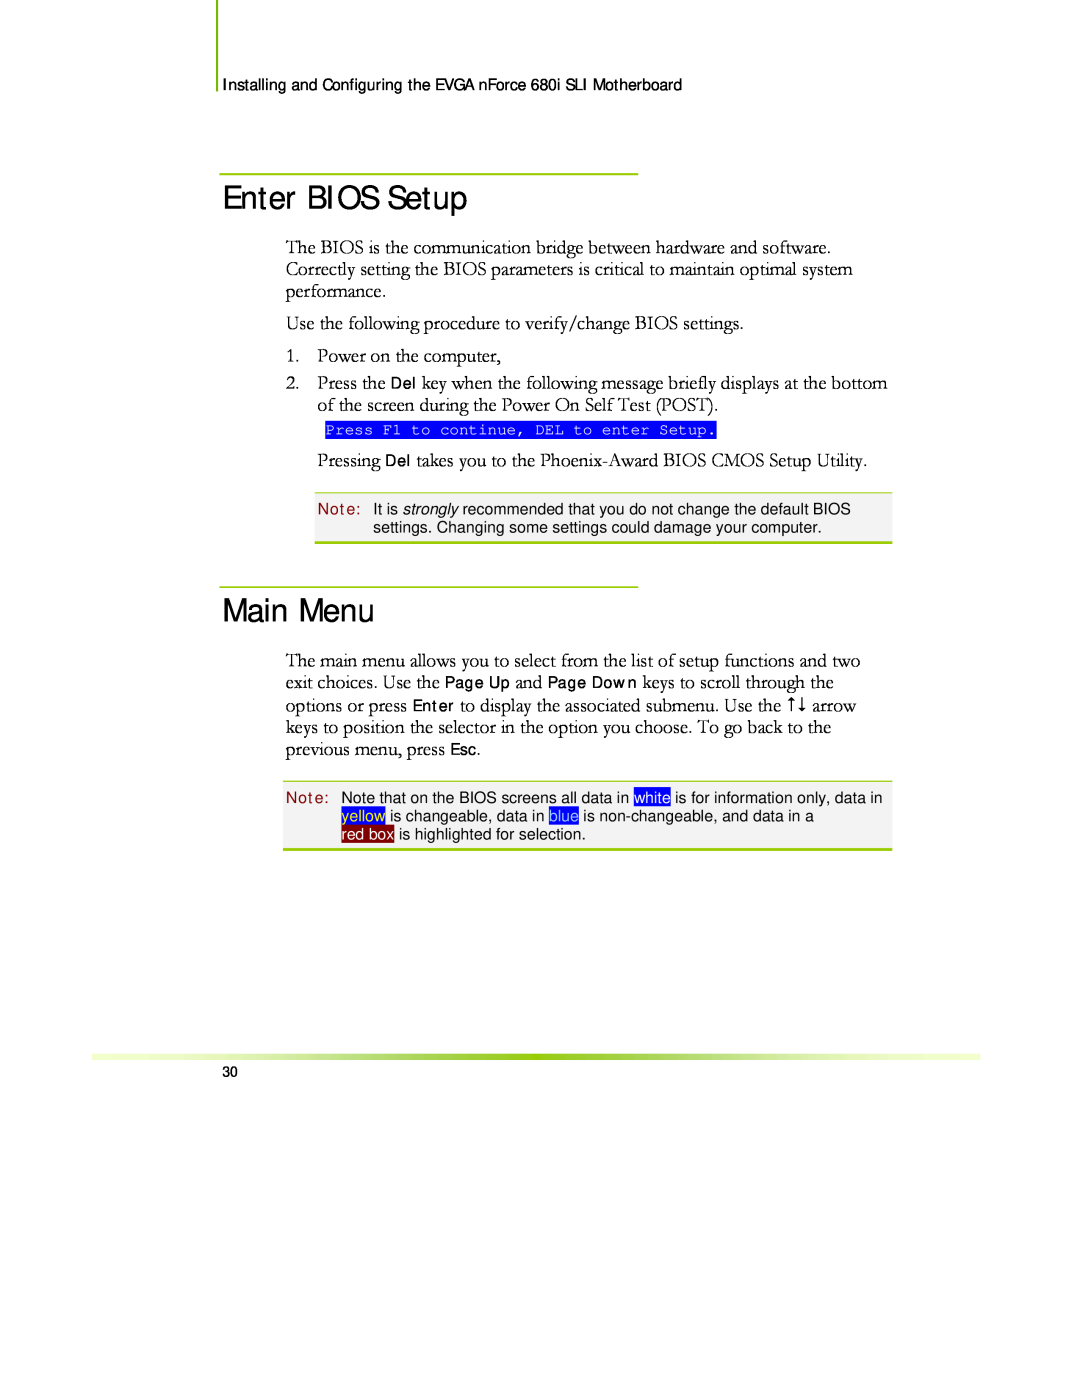 EVGA 122-CK-NF68-XX manual Enter BIOS Setup, Main Menu 